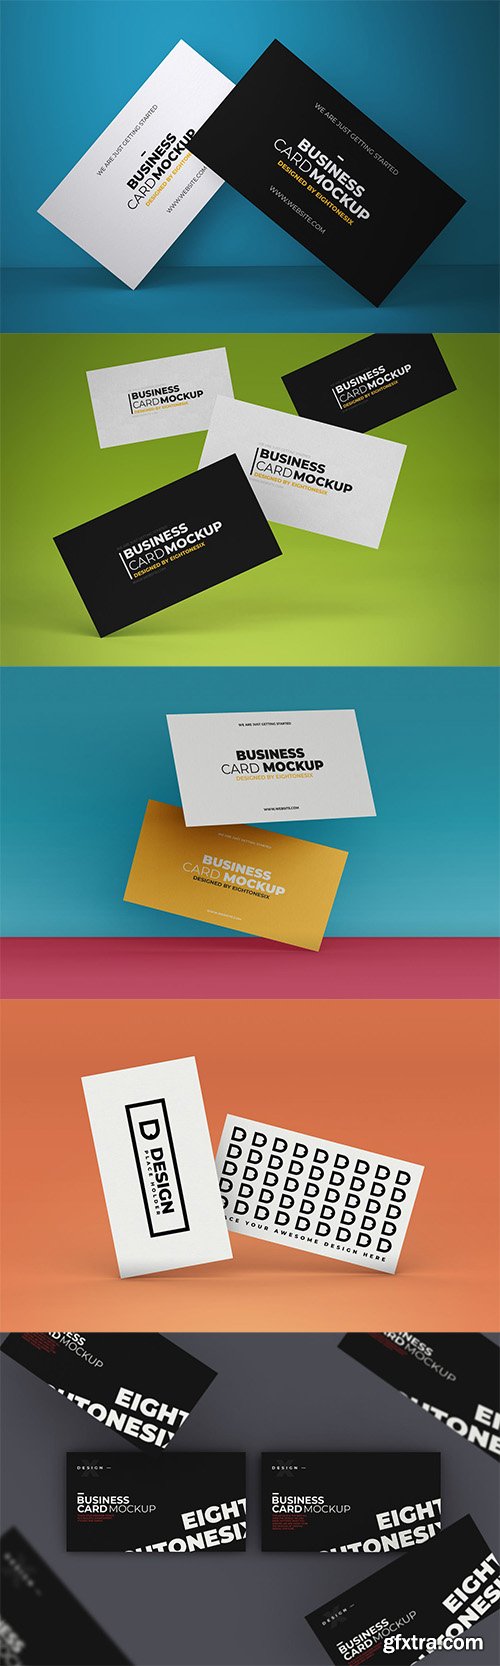 5 Business Card Mock-up Templates